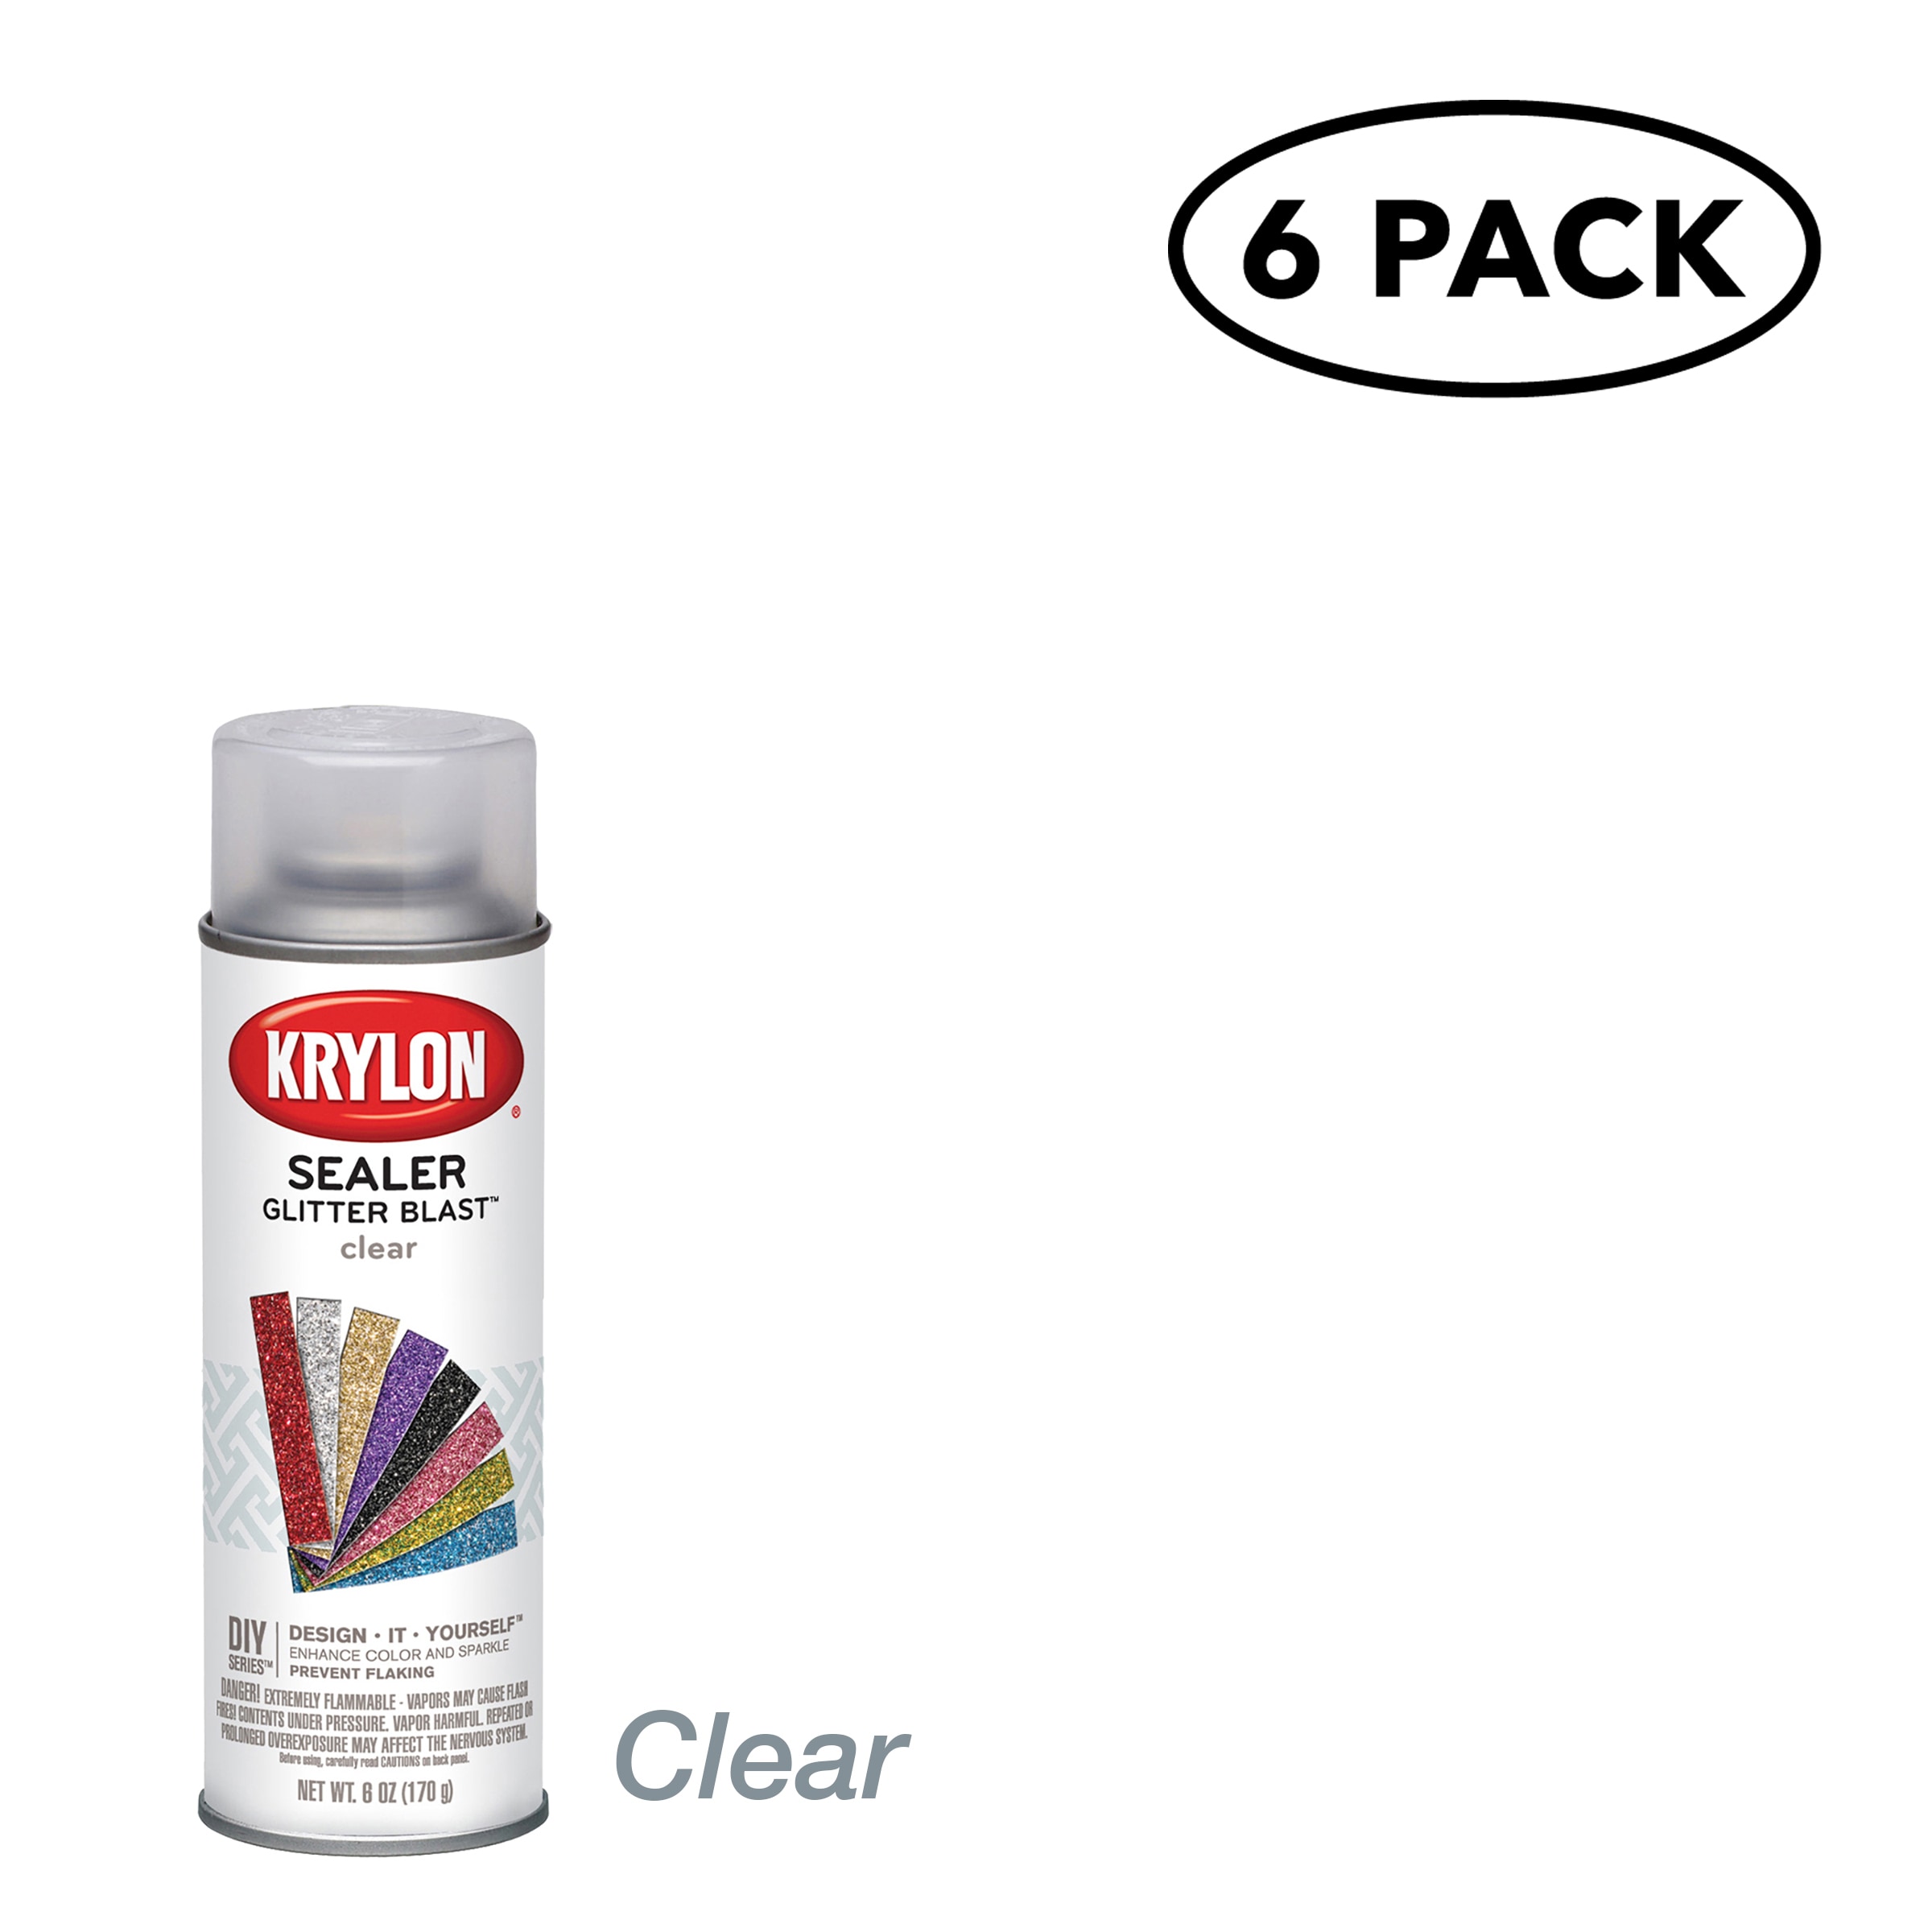 Krylon Glitter Blast Spray Paint, 5.7 Oz., Golden Glow